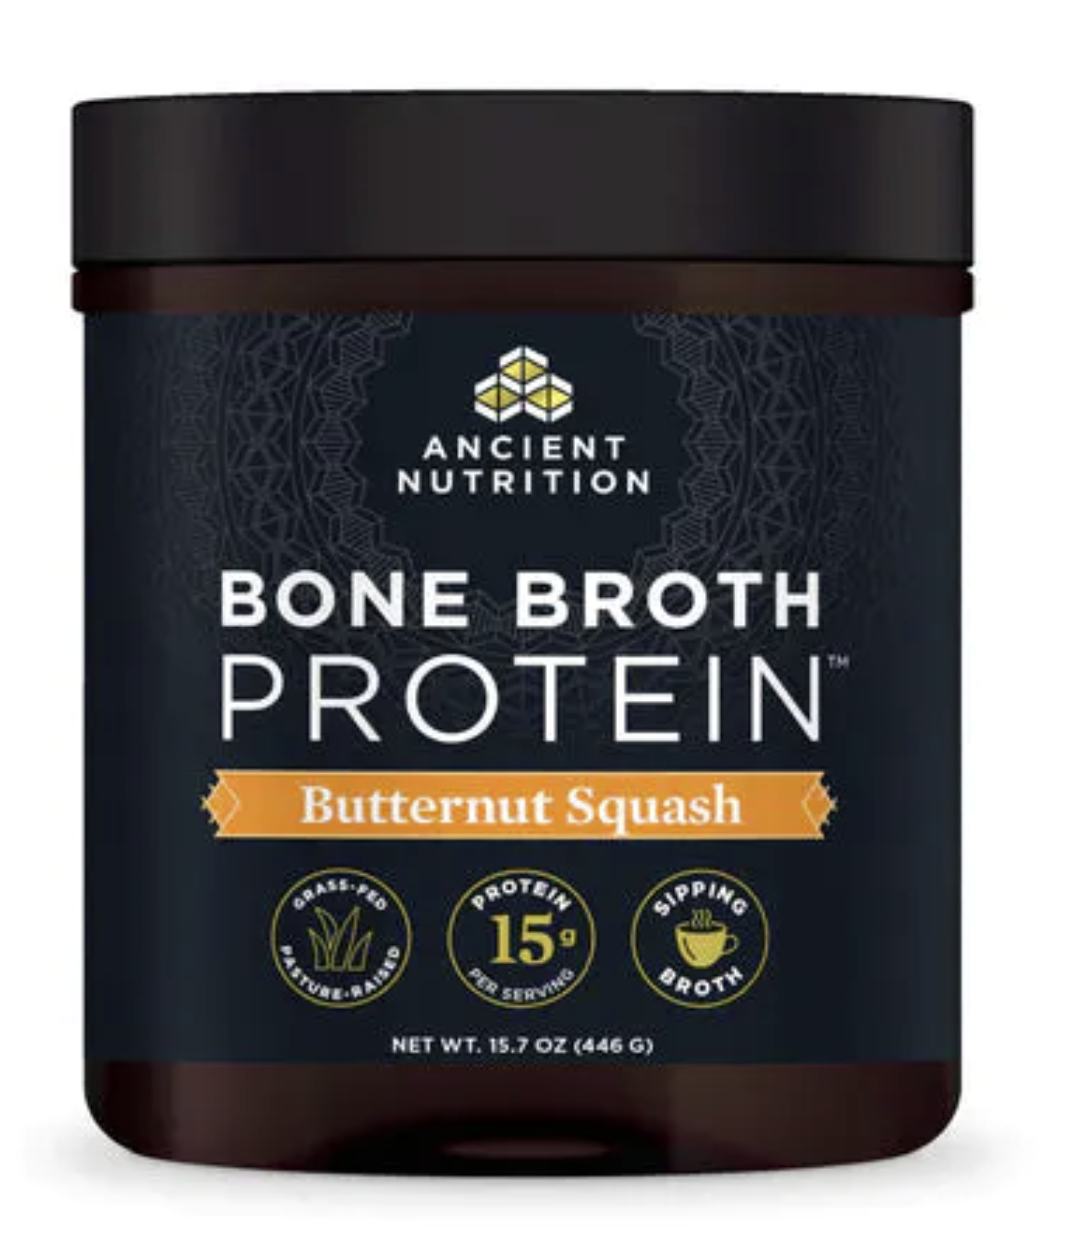 Ancient Nutrition Bone Broth Protein Butternut Squash 15.7oz